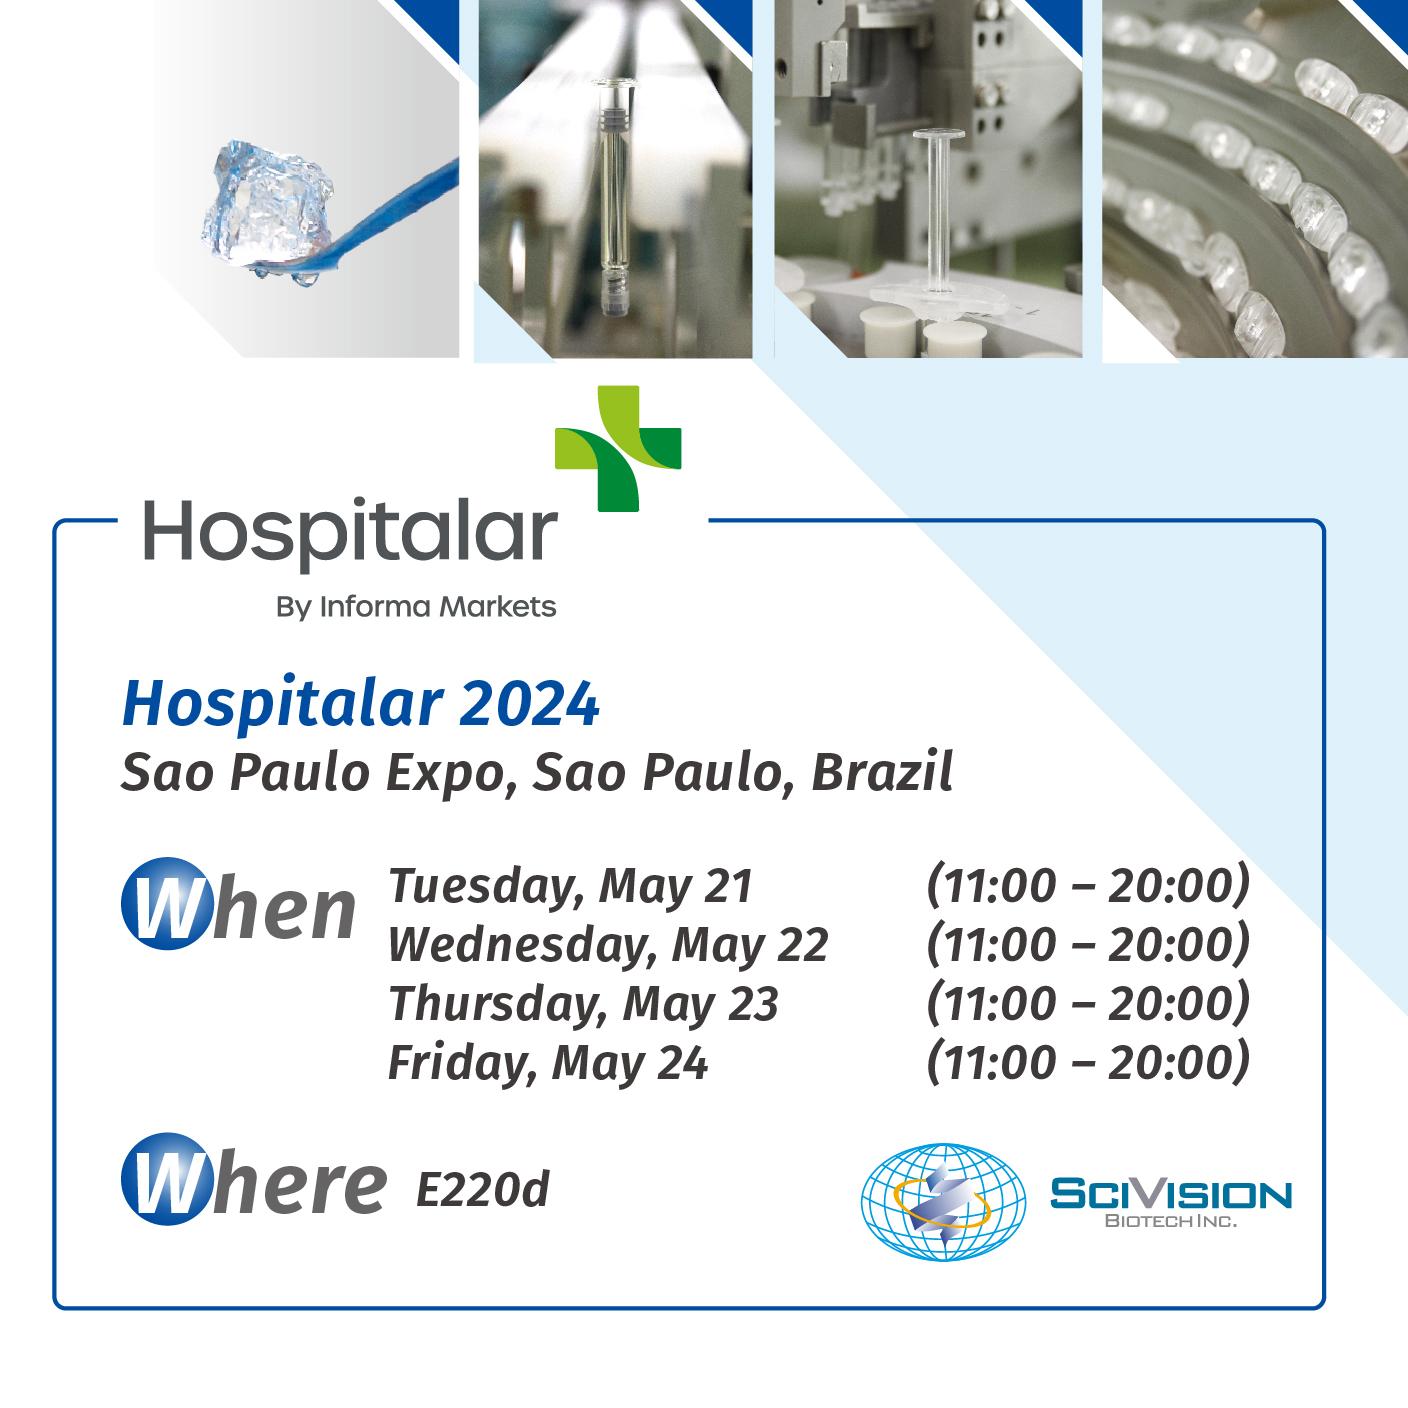 Hospitalar 2024